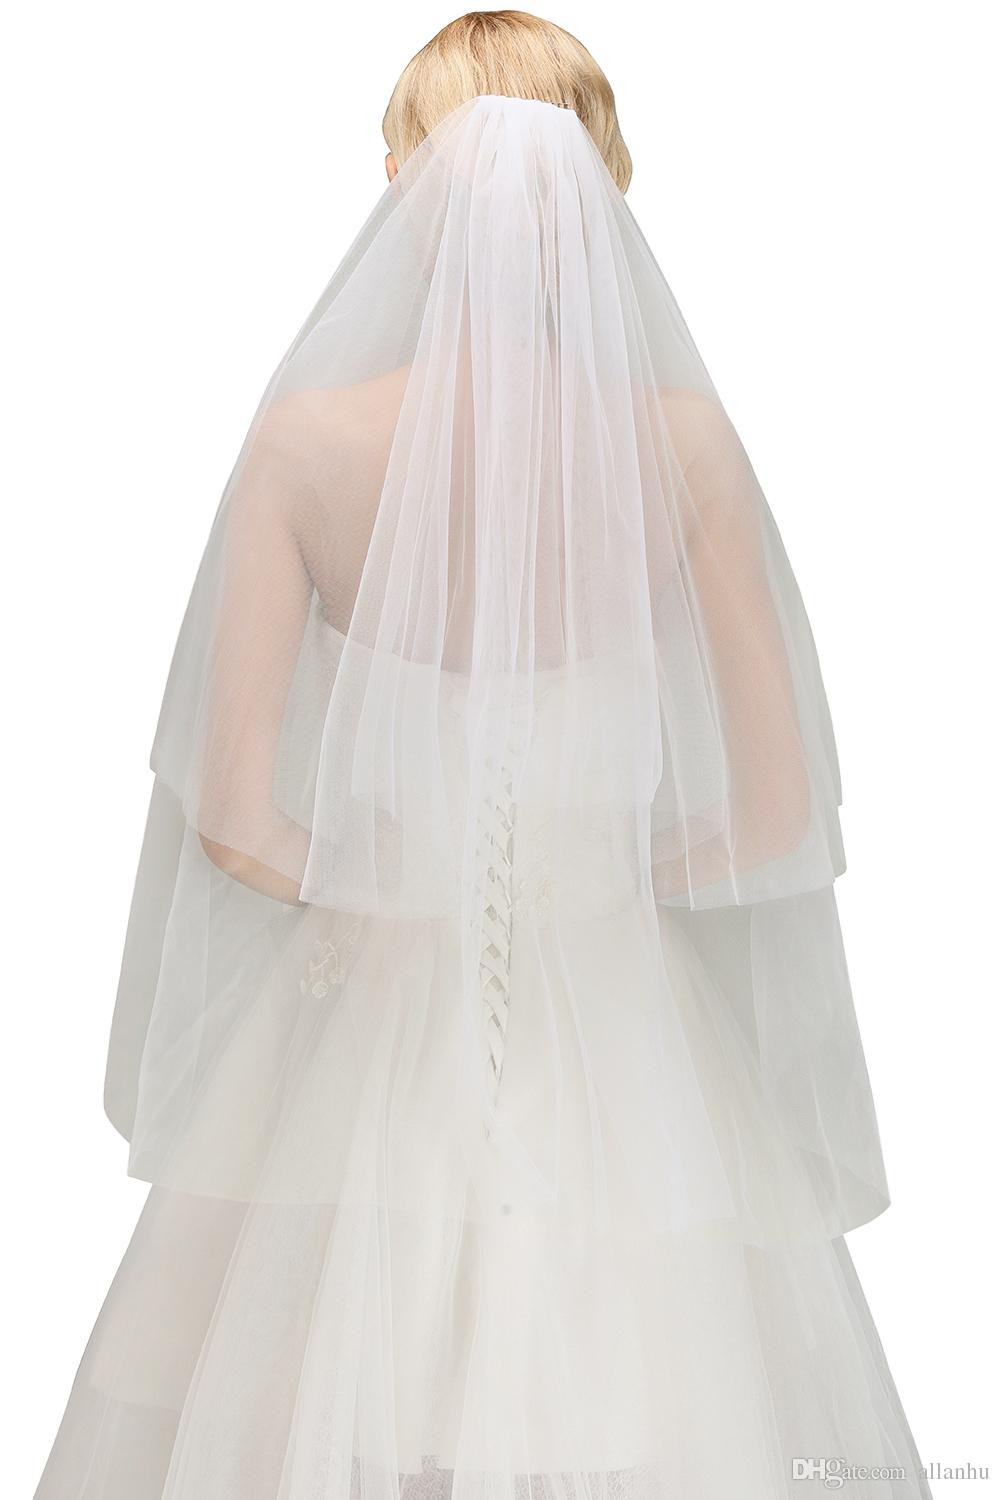 Used Wedding Veils
 ly $6 99 Wedding Bikini Veil Two Layers Cheap 2019